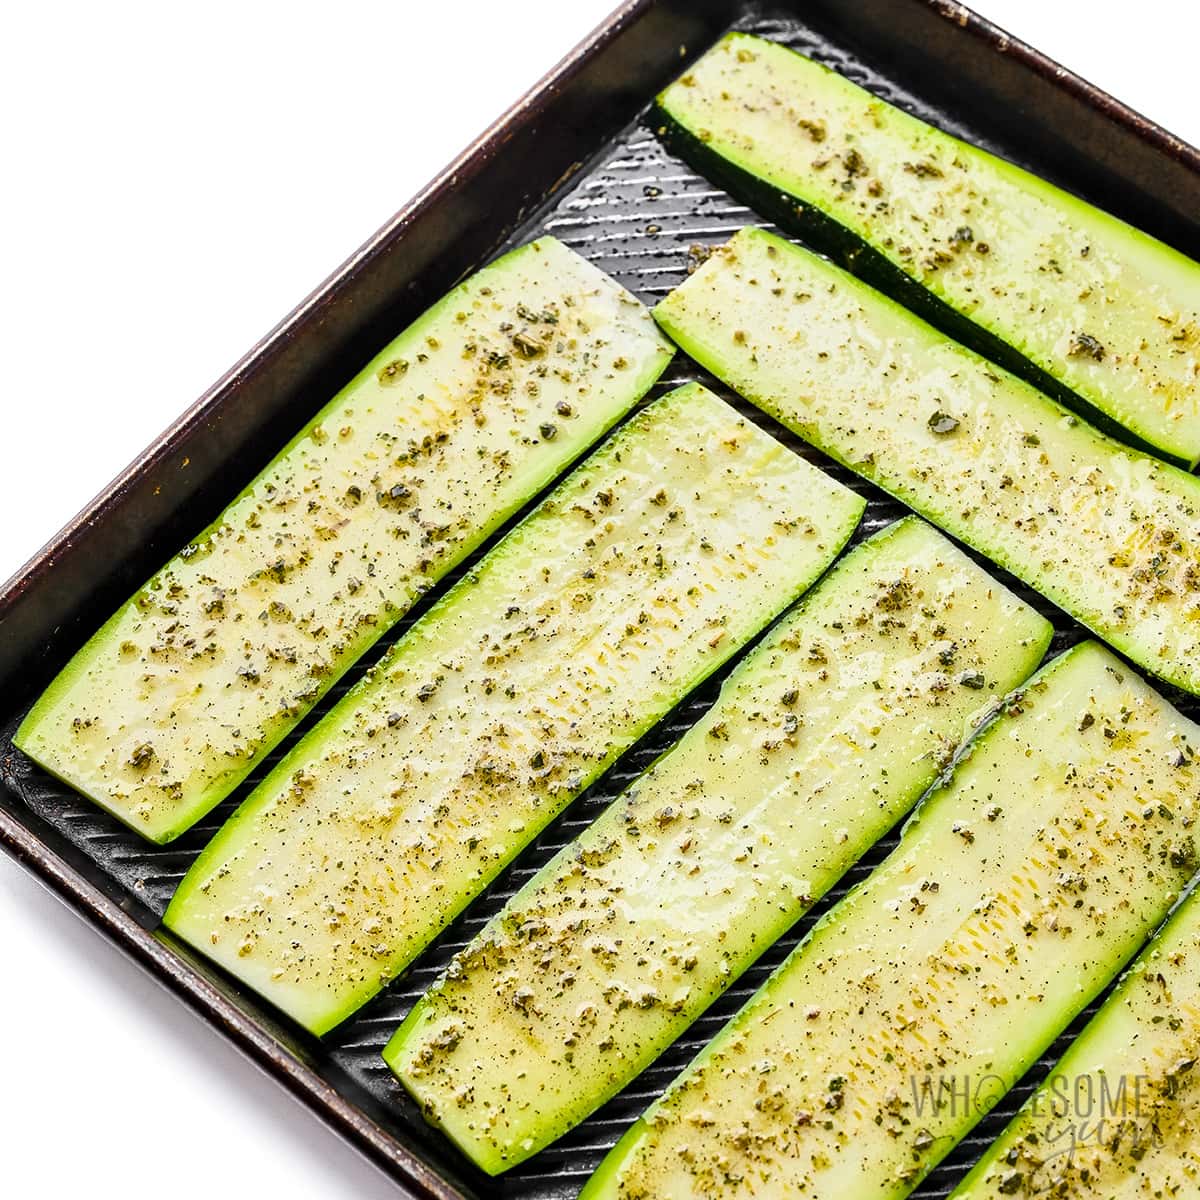 Sliced zucchini seasoned on a sheet pan.